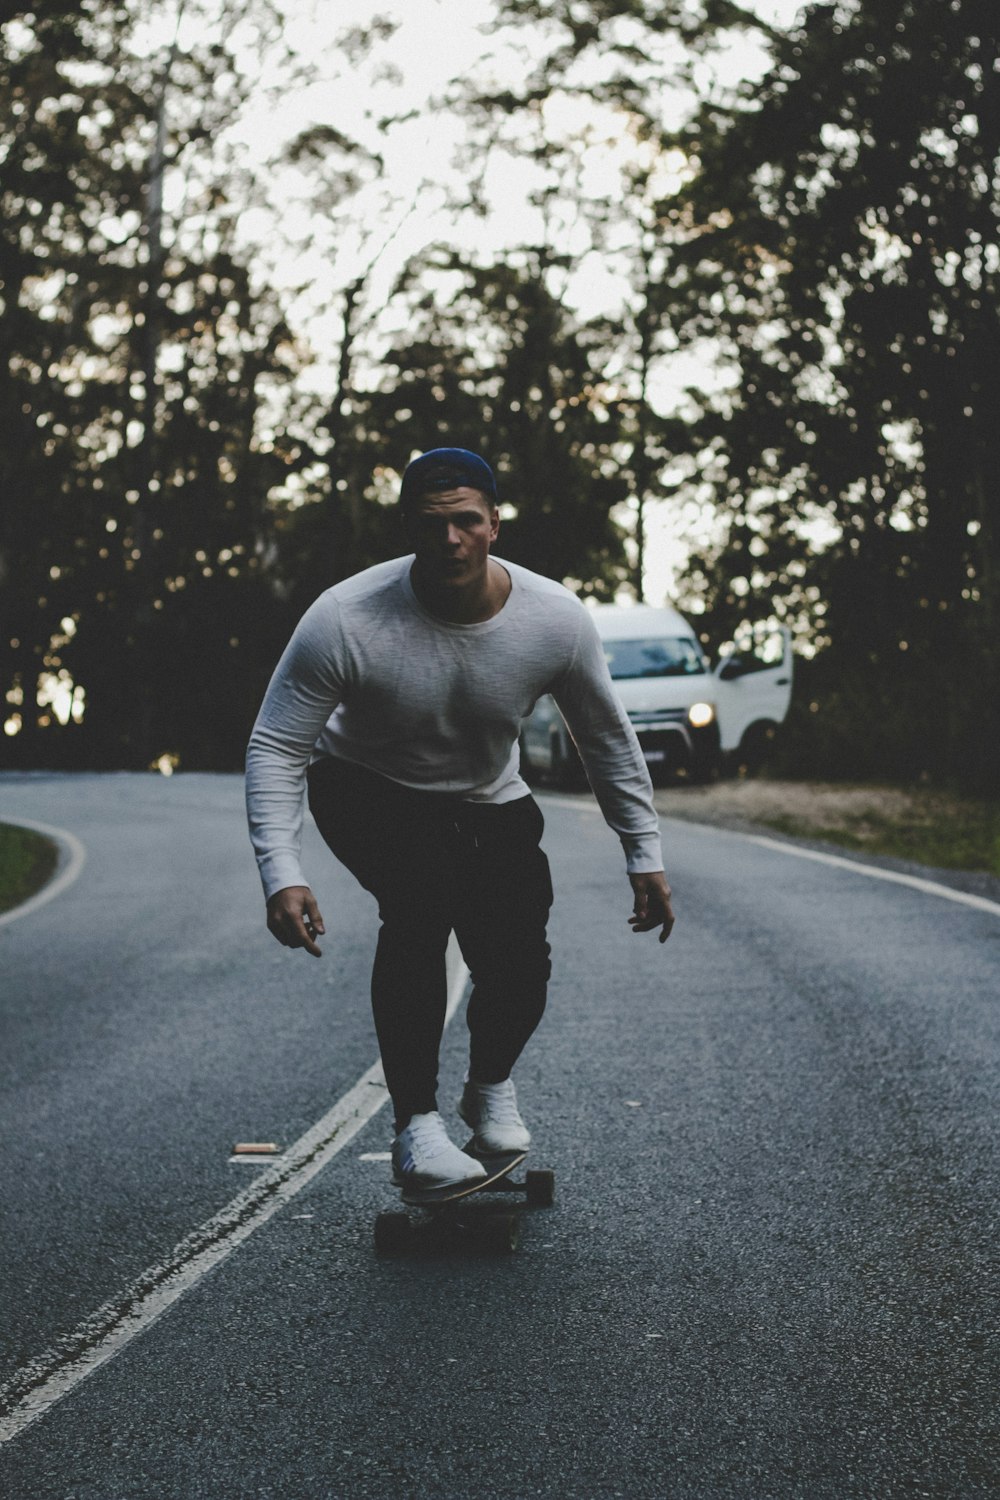 man riding on the skateboard